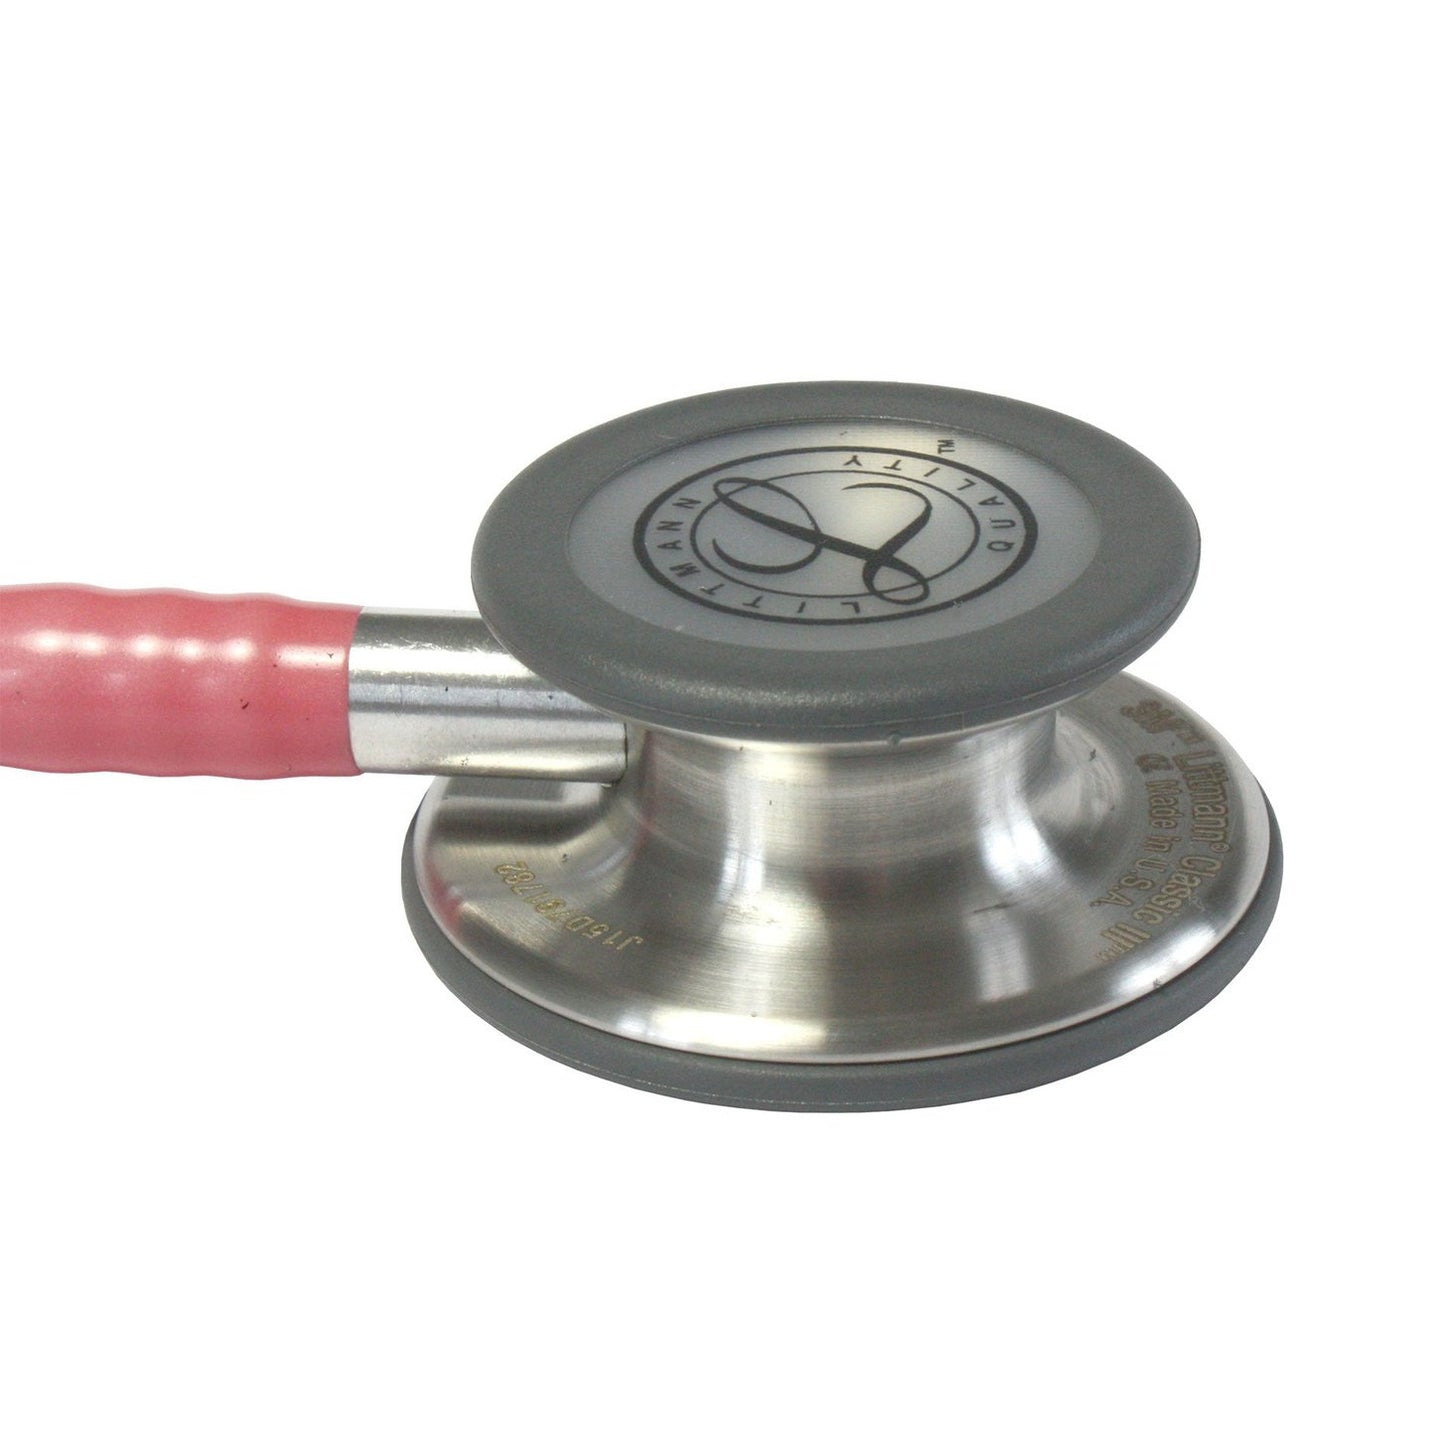 Littmann Classic III Monitoring Stethoscope: Pearl Pink 5633 Stethoscopes 3M Littmann   